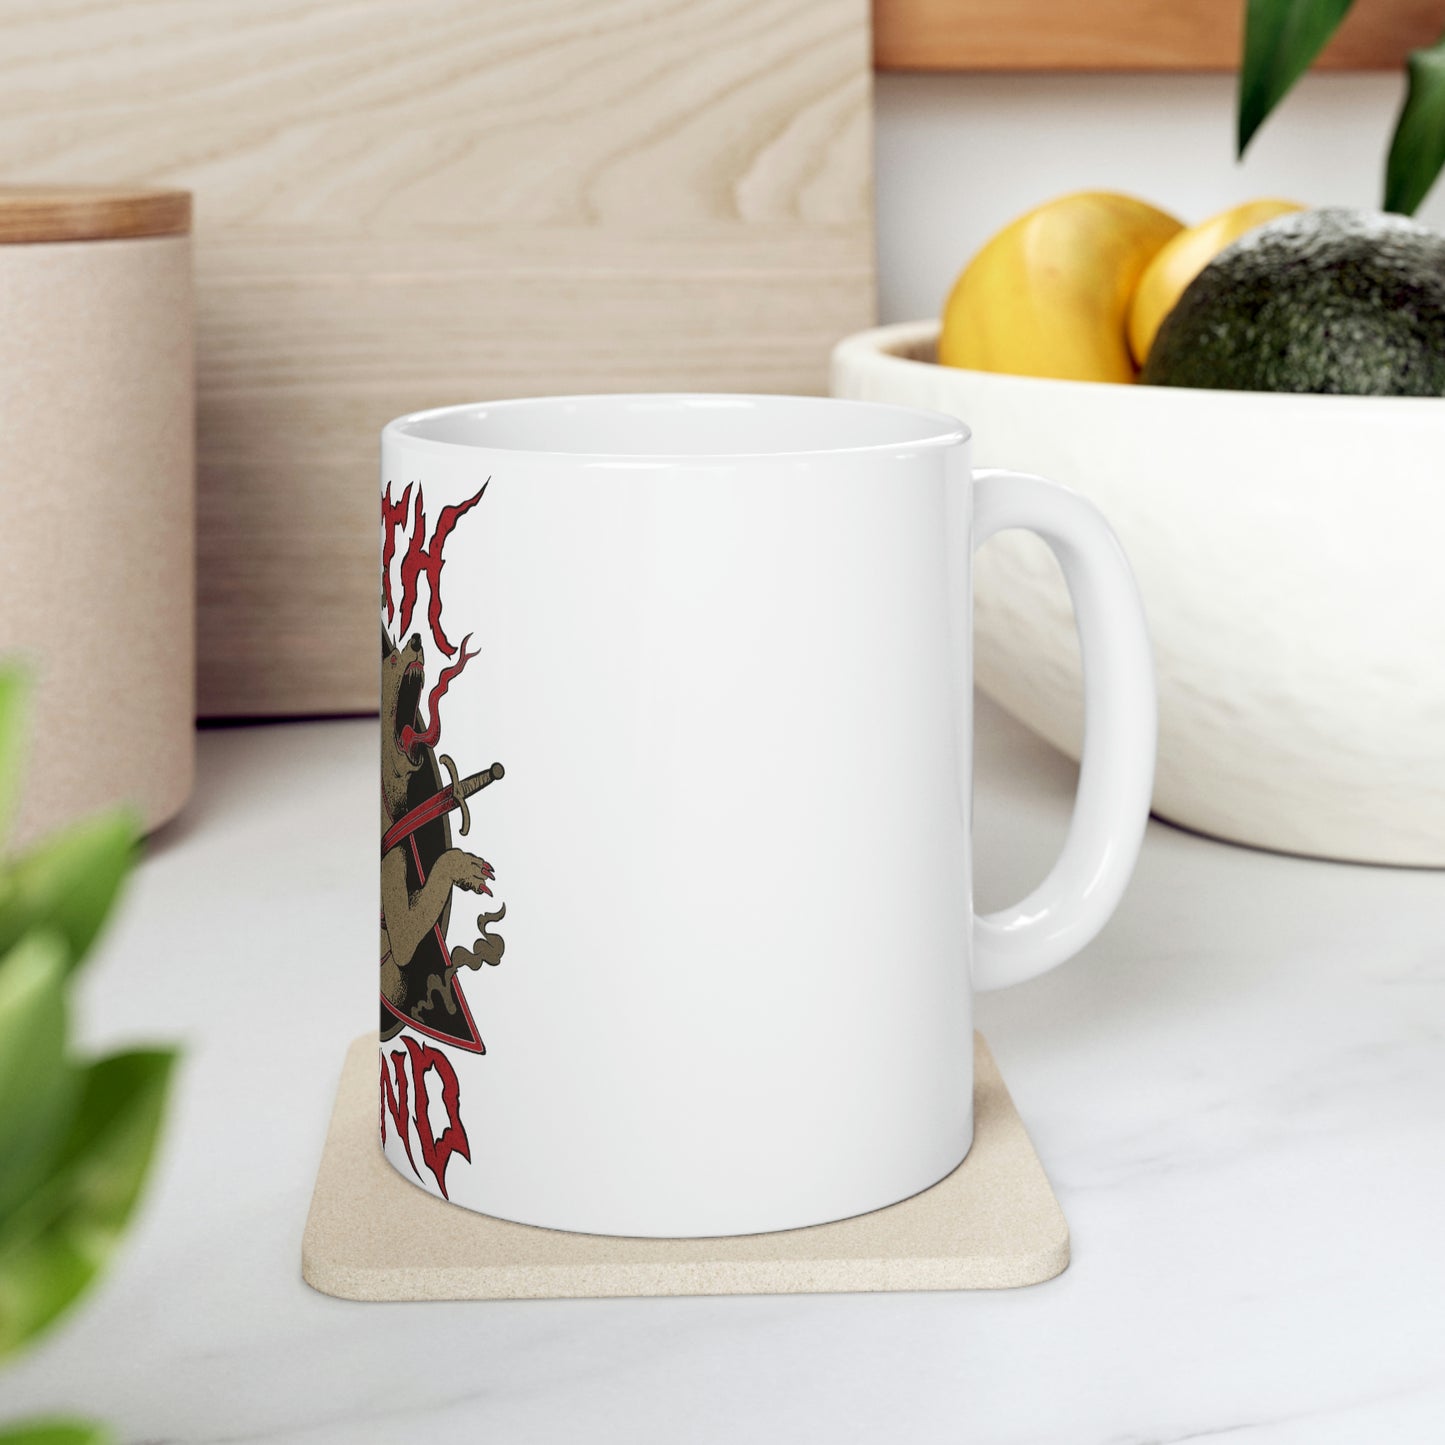 Death Hound Goth Aesthetic White Ceramic Mug